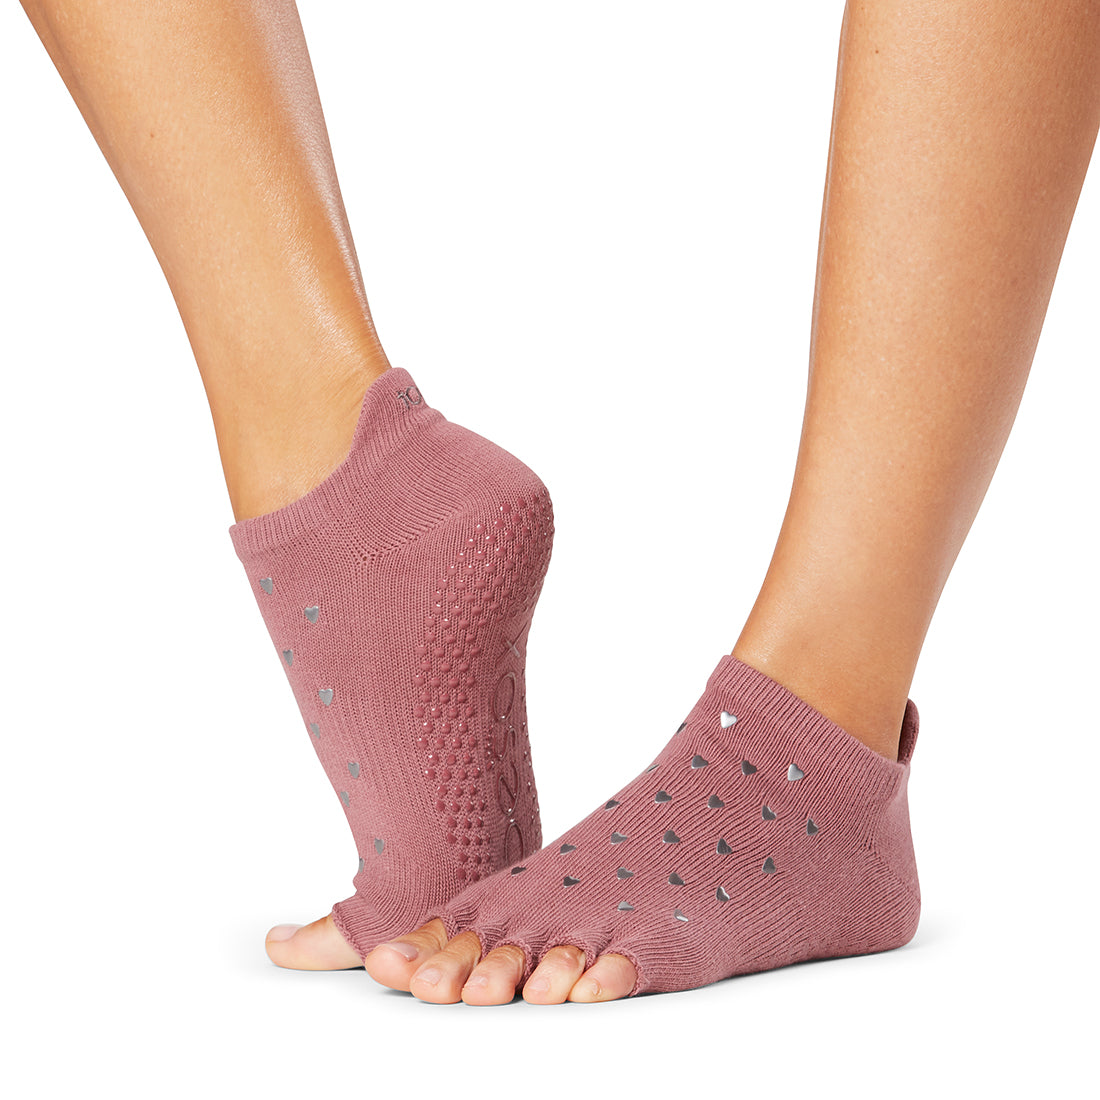 Grip Socks in Low Rise Snowfall by ToeSox